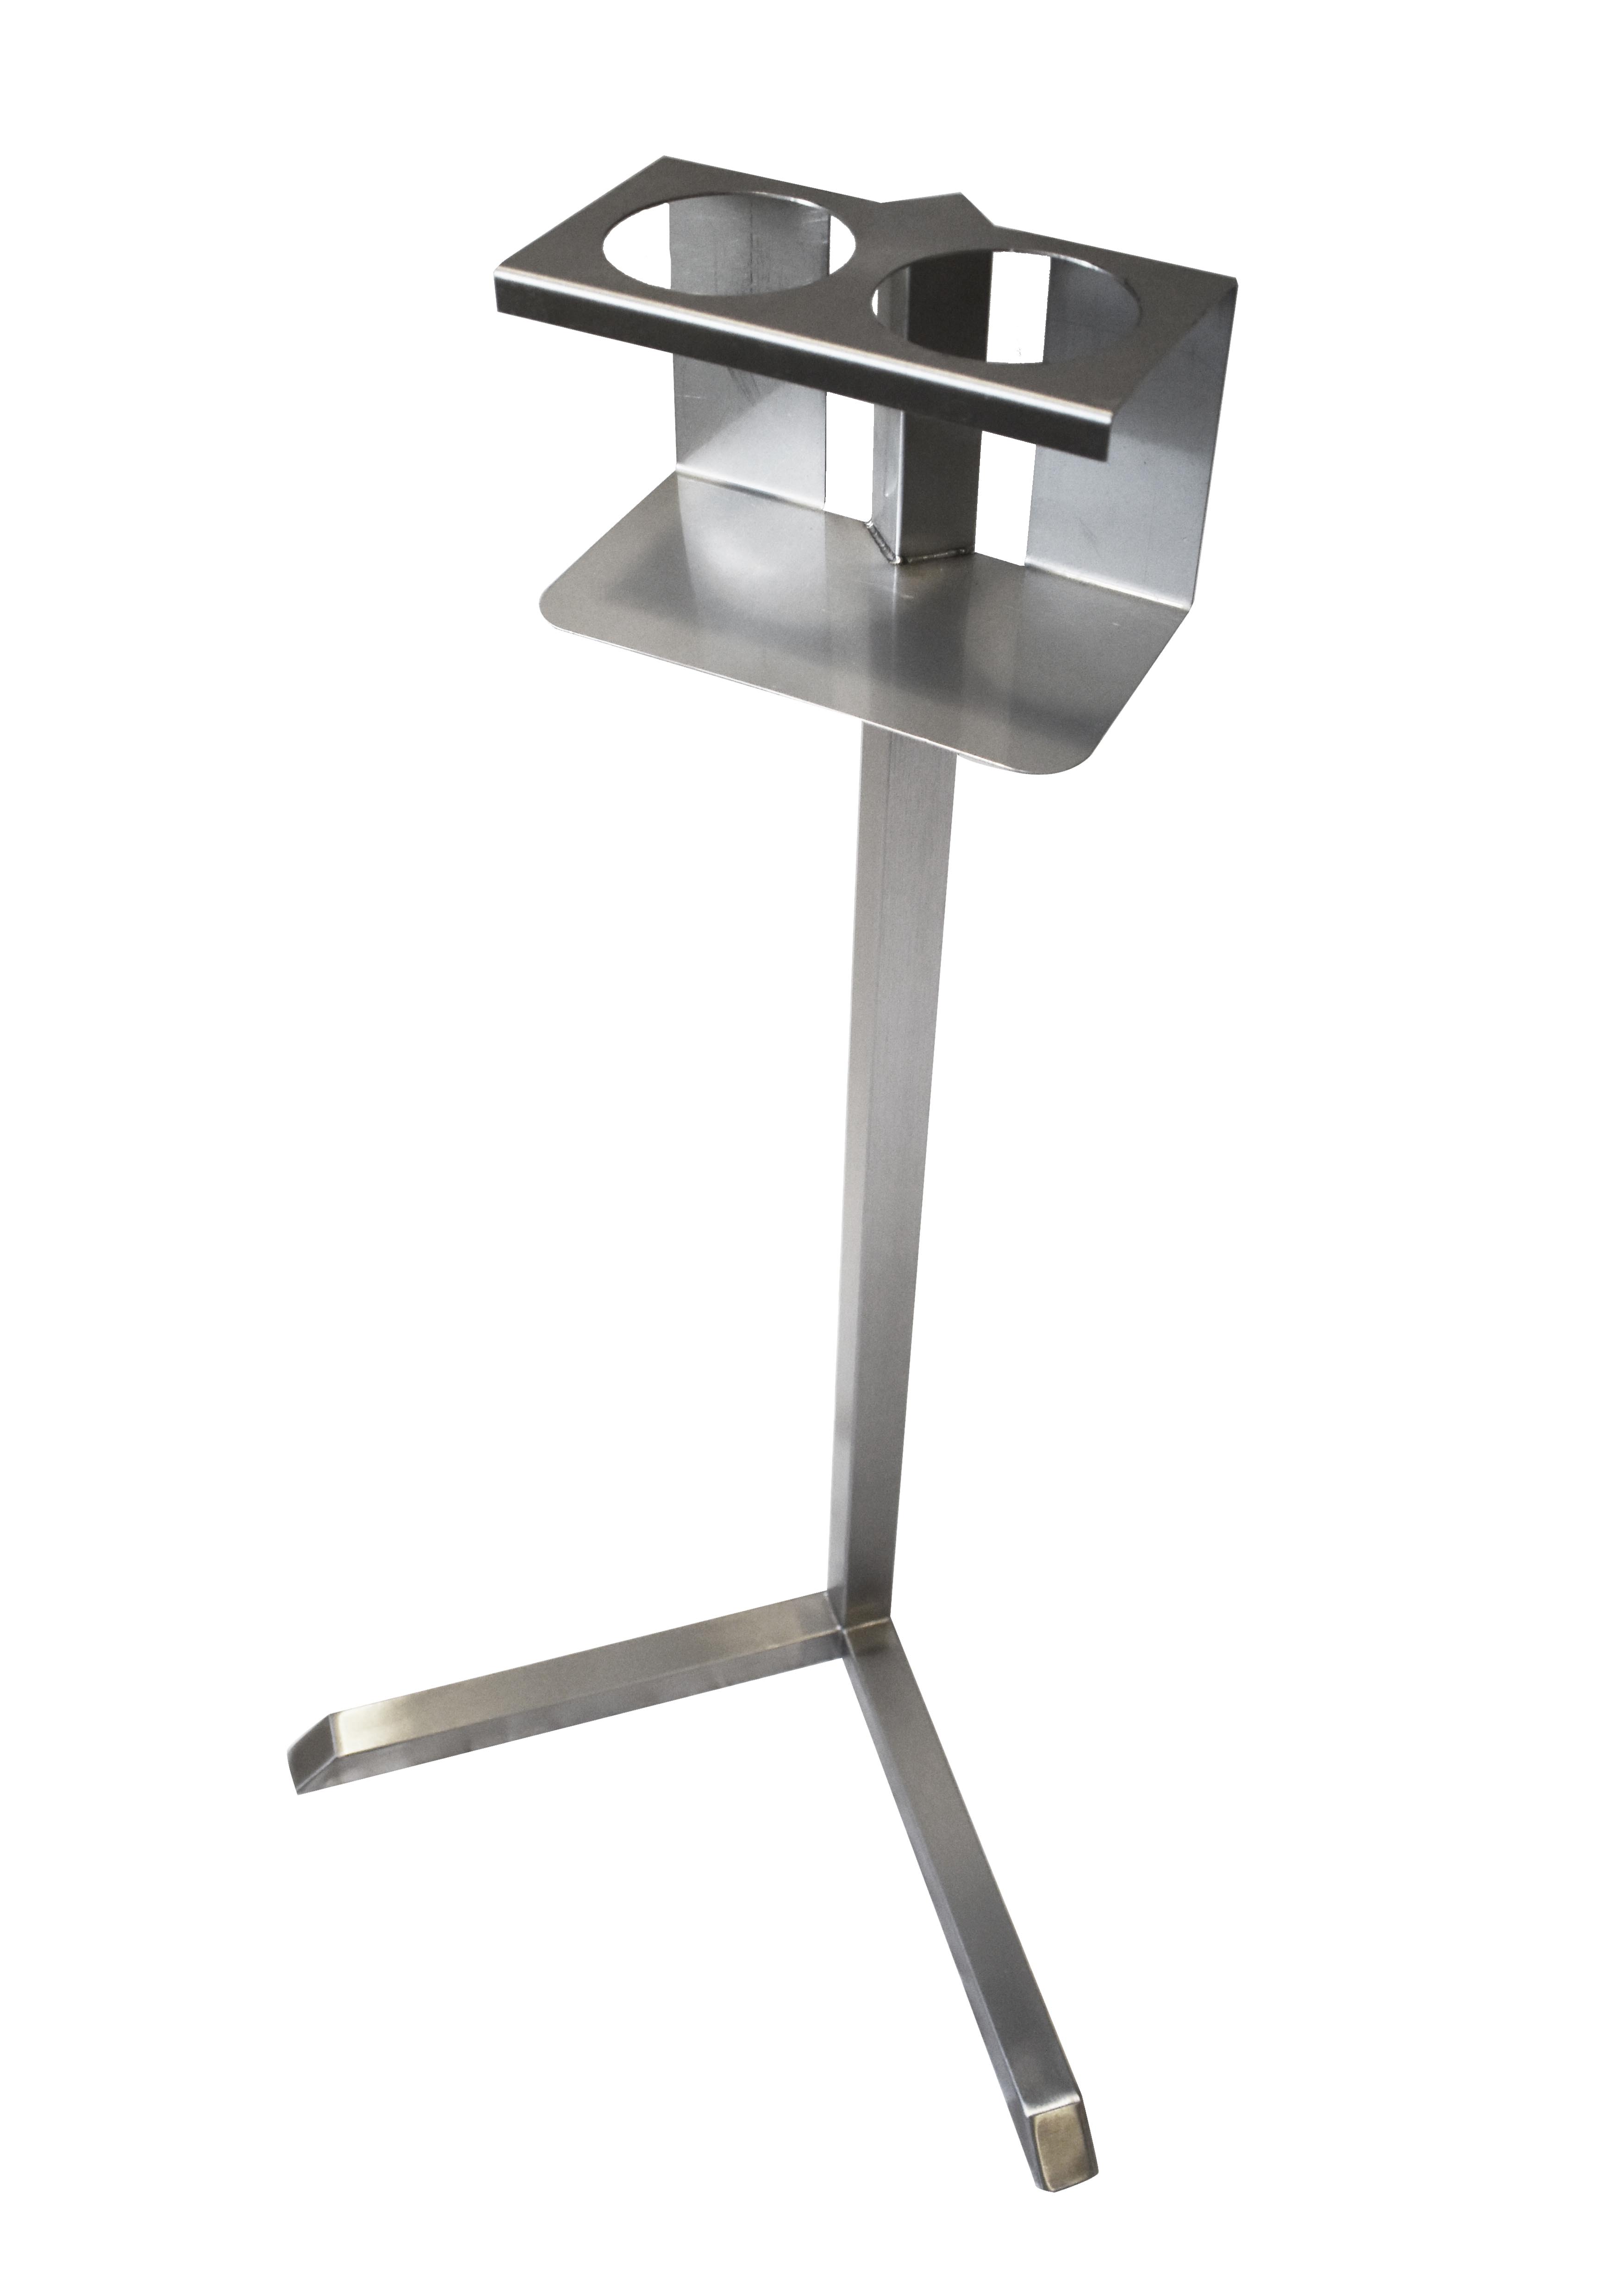 I like to move it, move it: Teknomek introduces pedestal bottle holder for freestanding flexibility